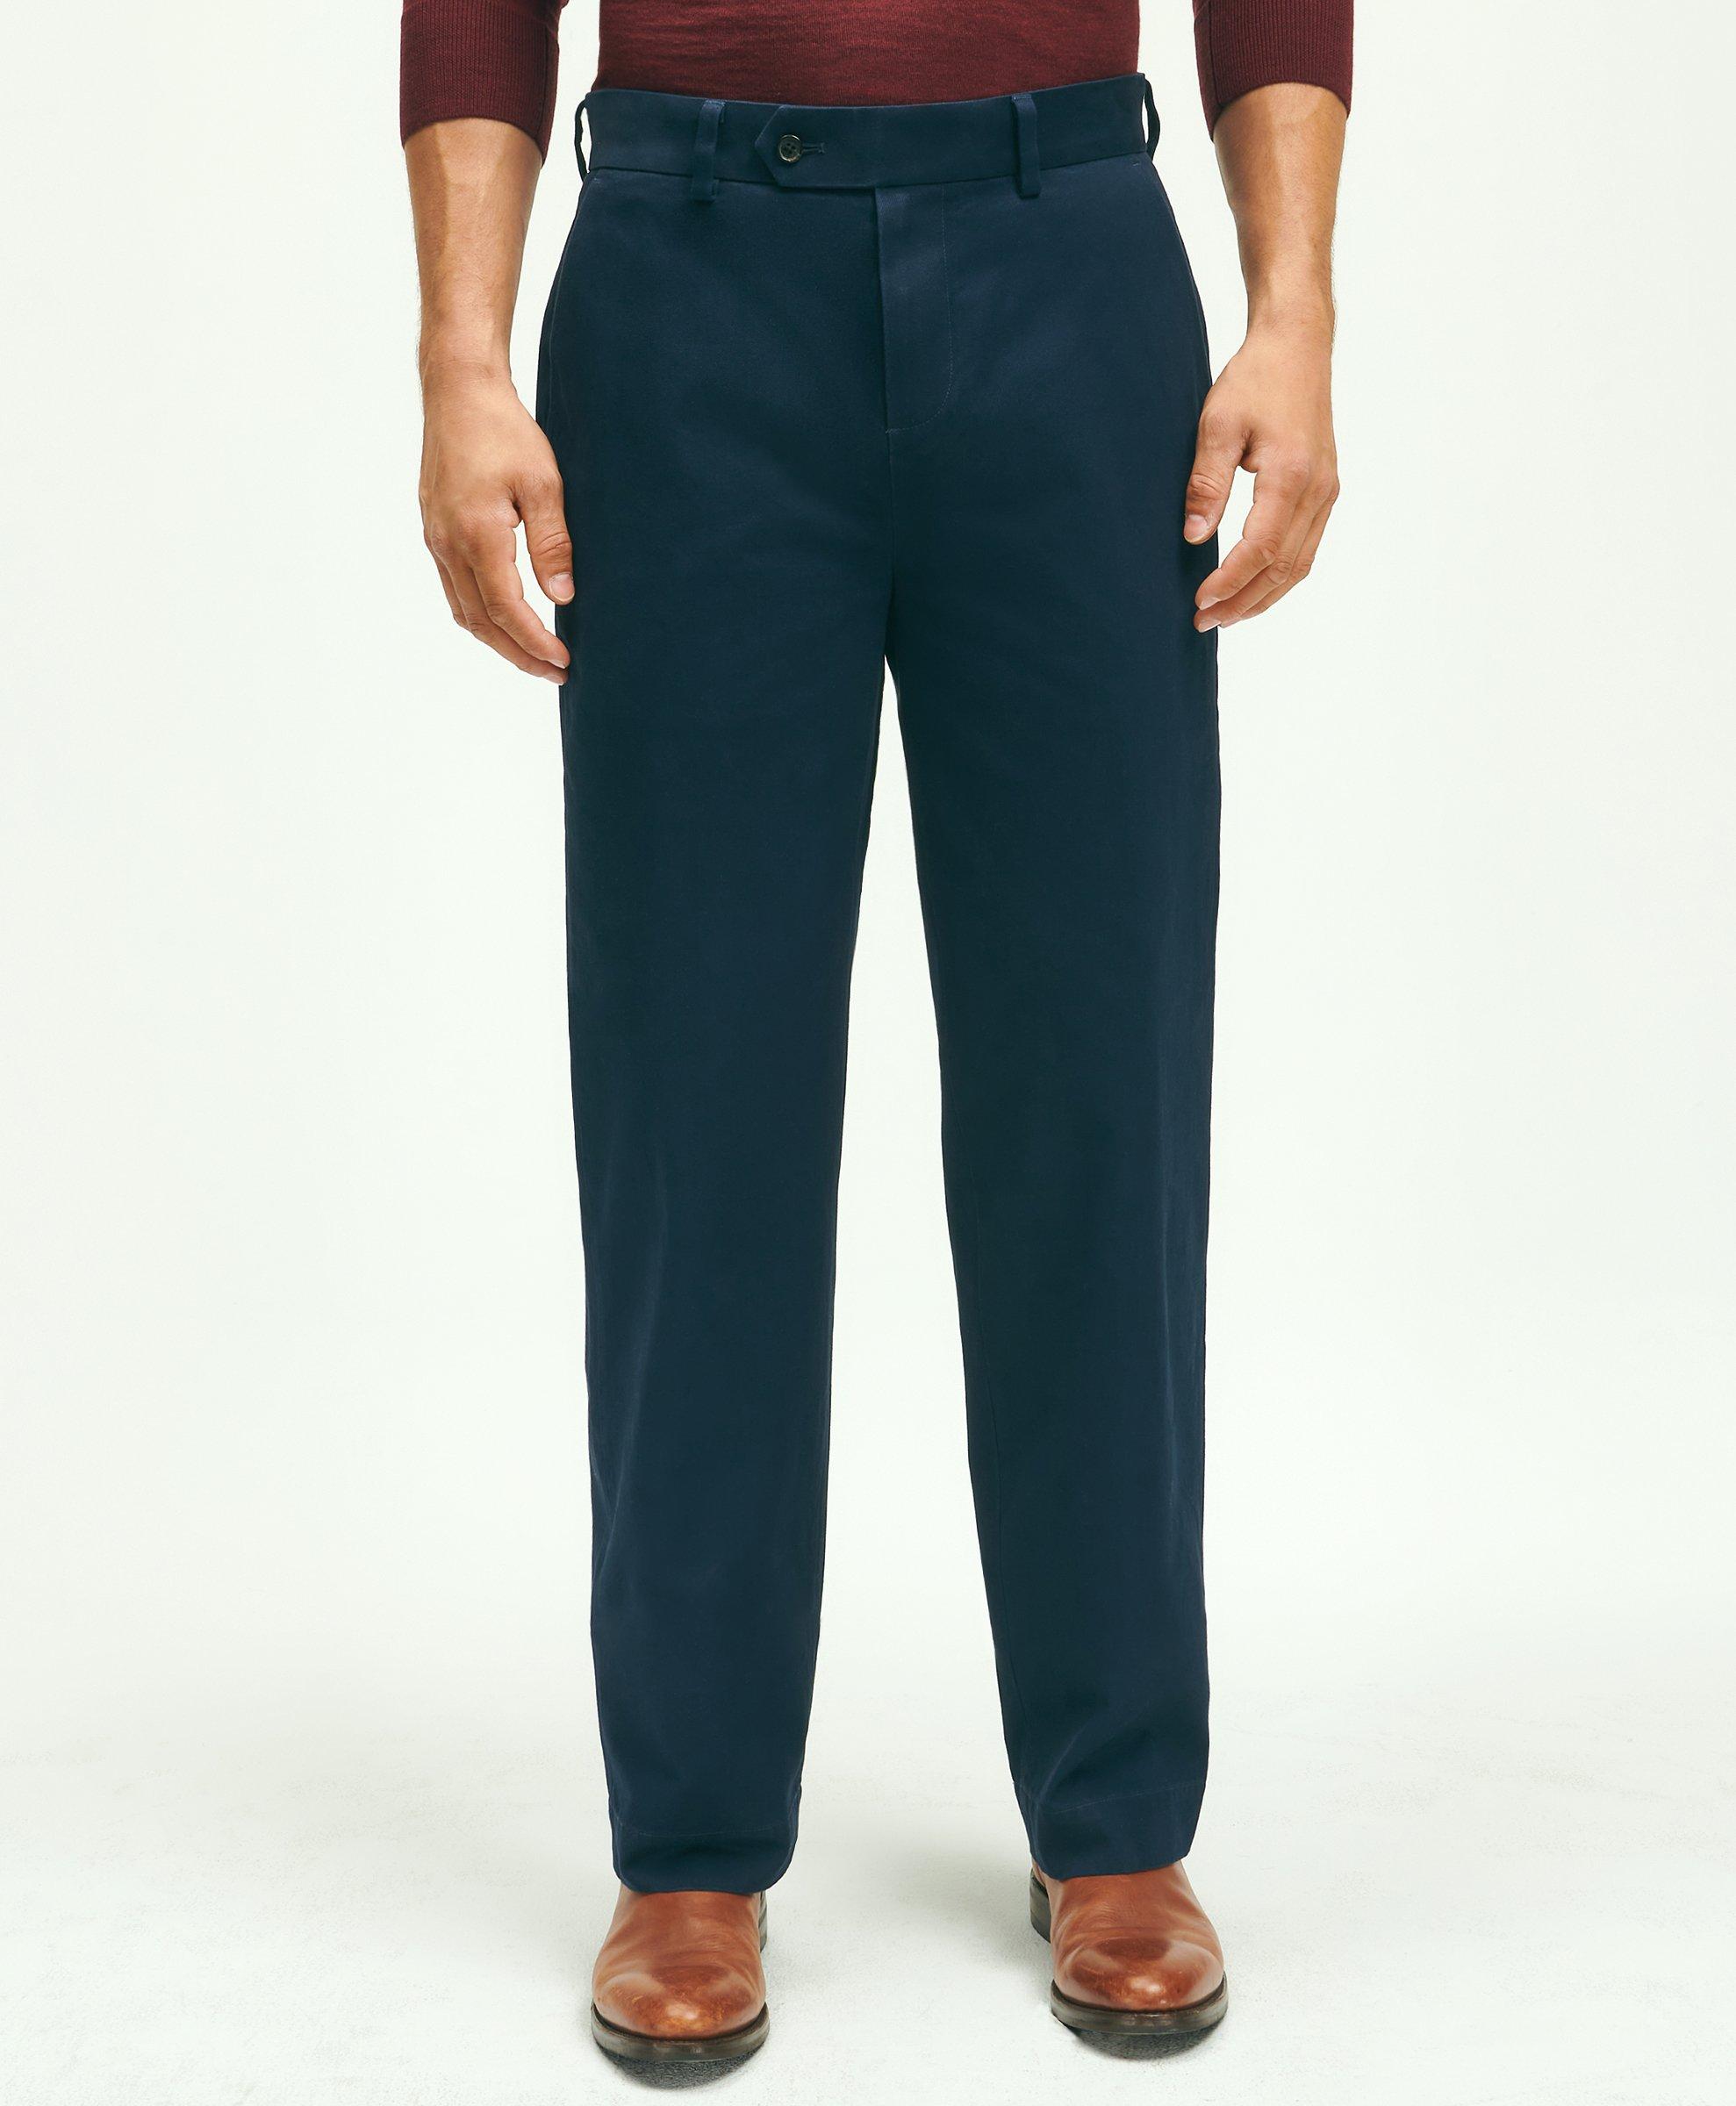 Cotton Vintage Chino Pants, image 1